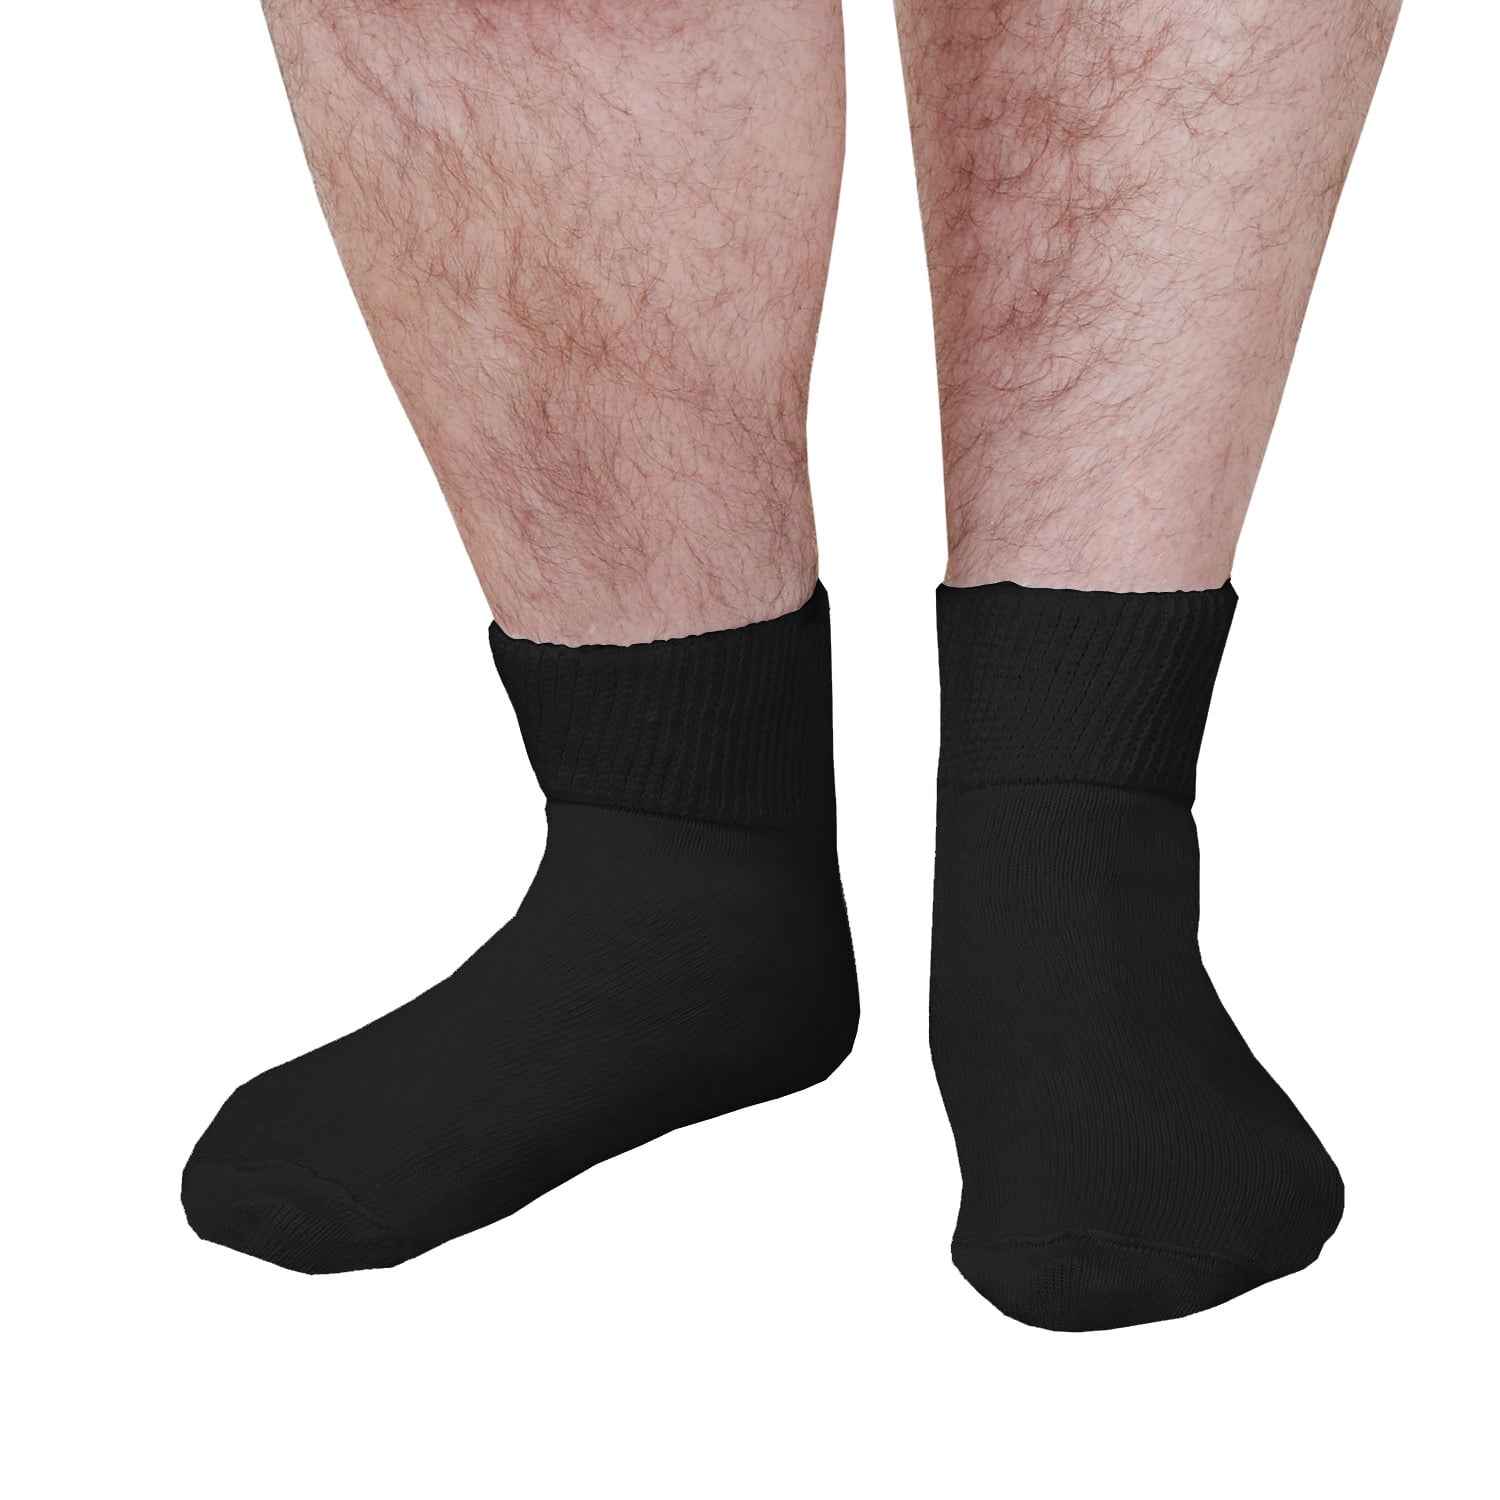 socks for large ankles